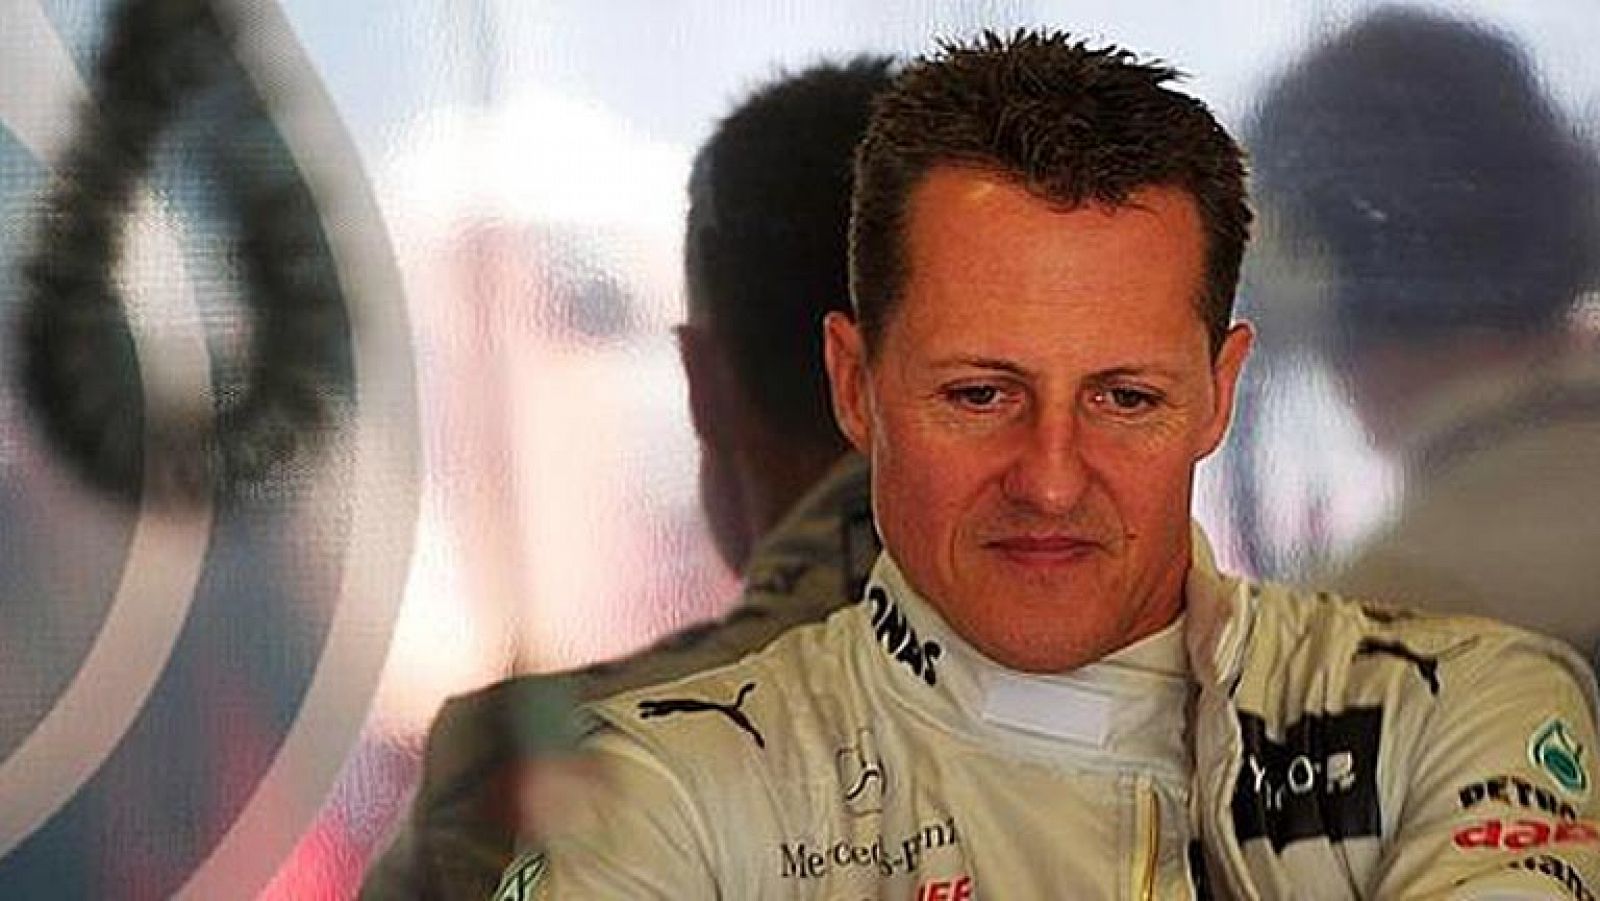 "Leve mejoría" de Schumacher que sigue grave